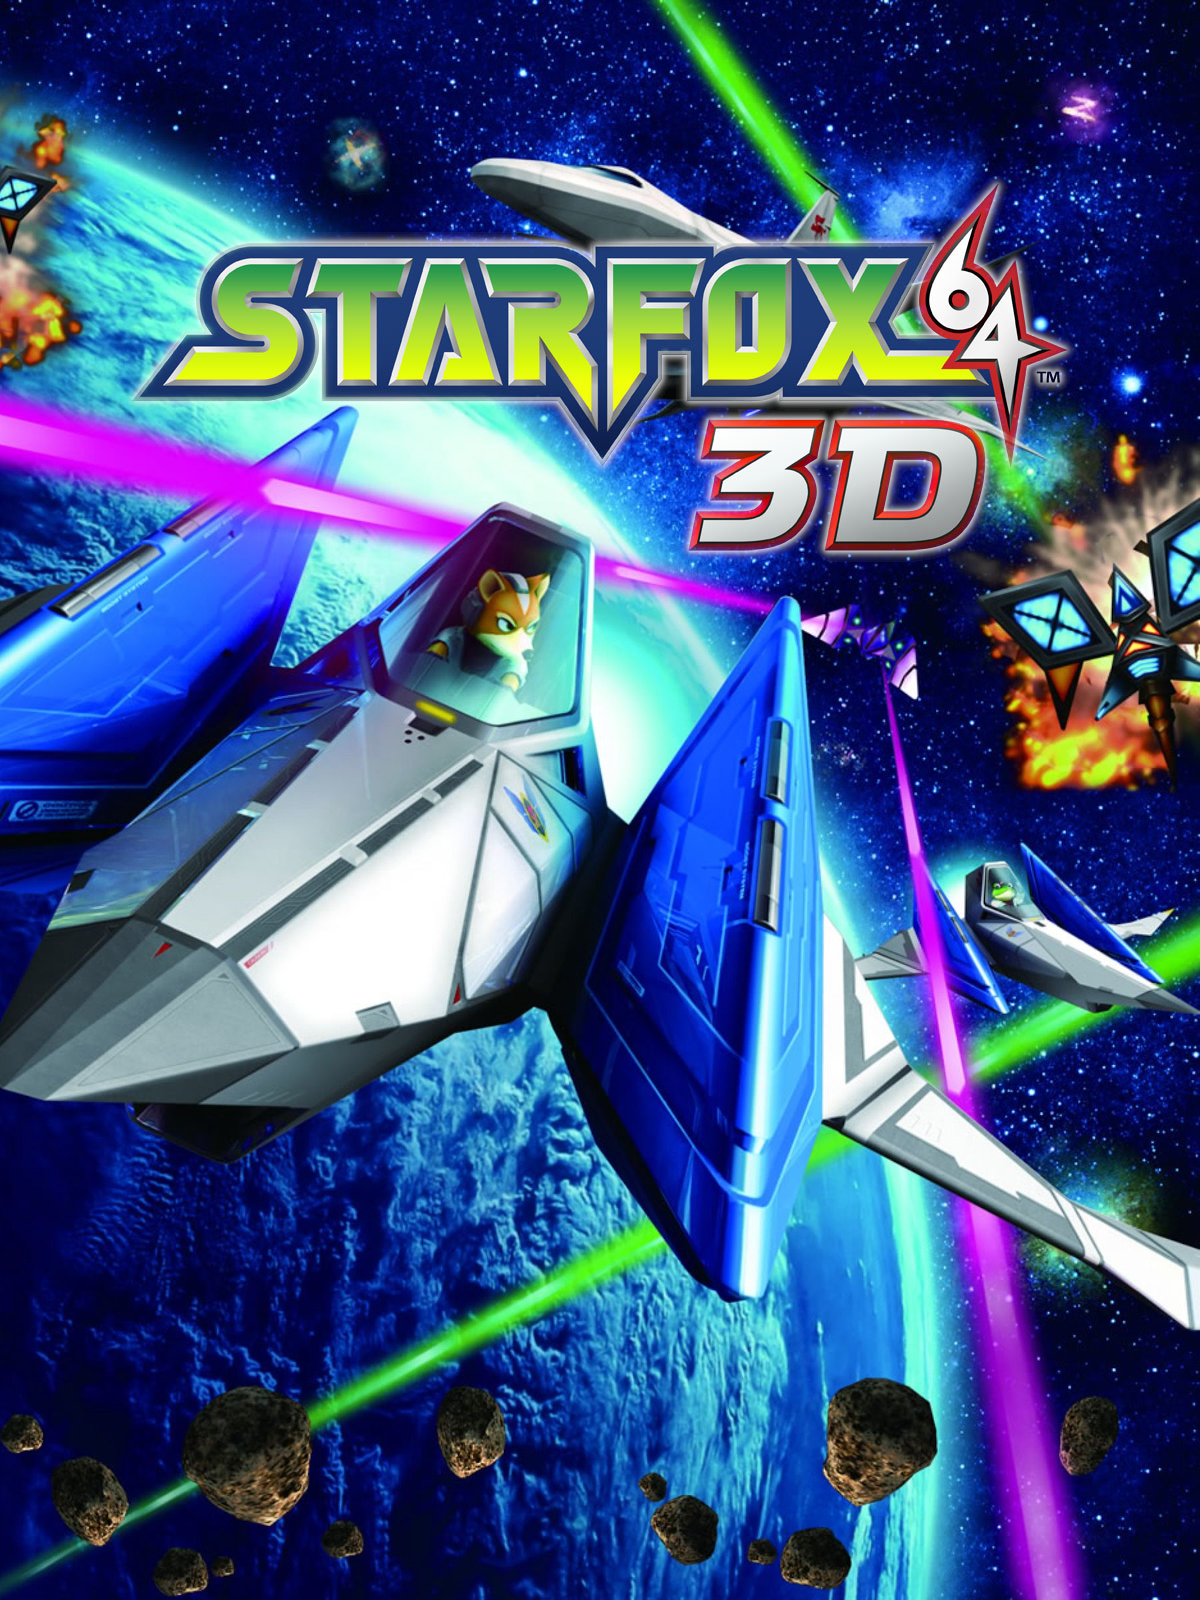 Star Fox 64 3D (2011)